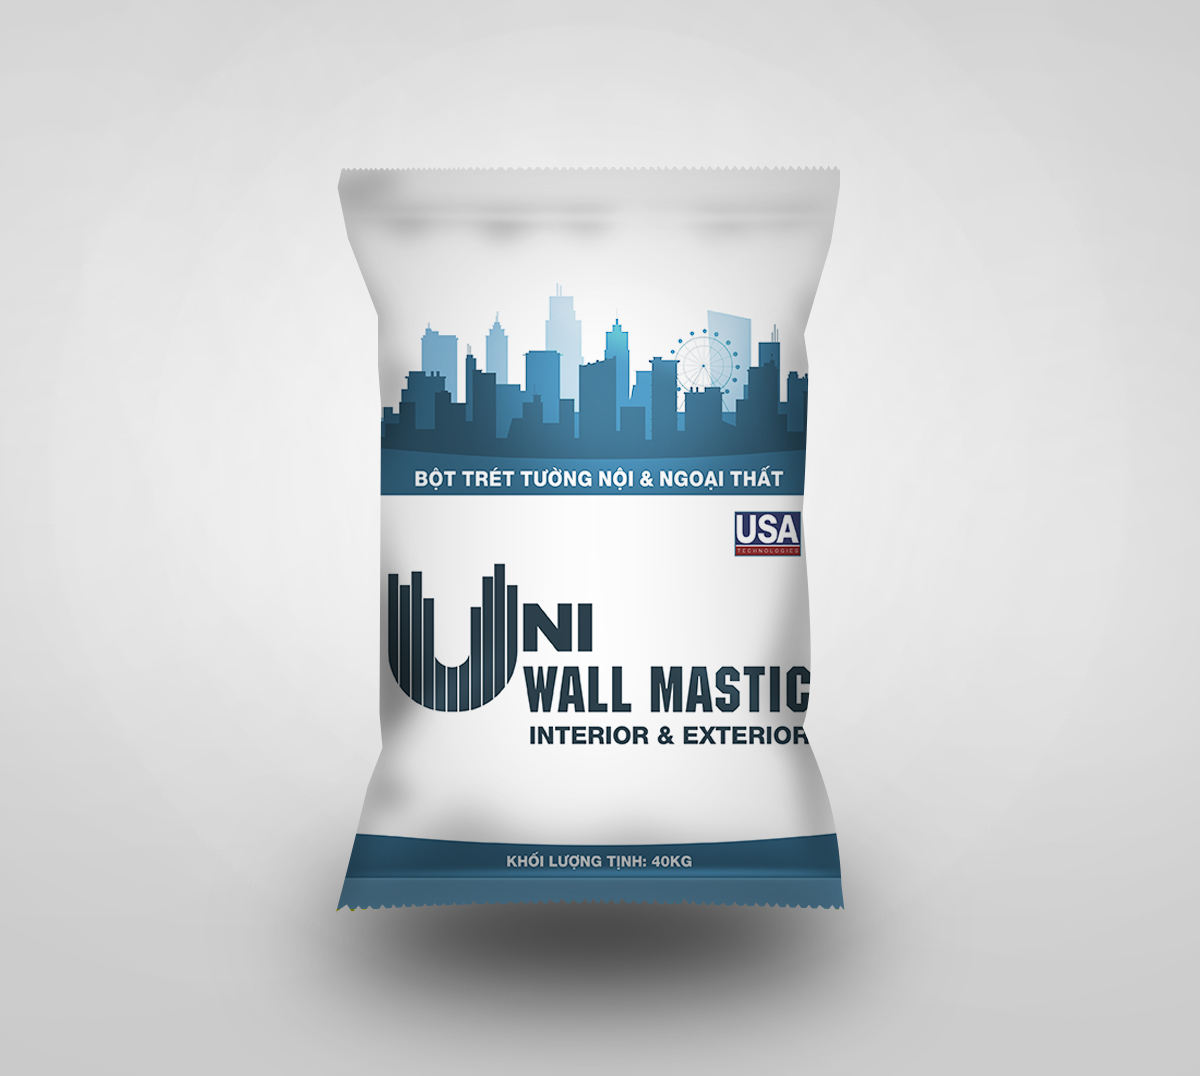 Wall Mastic